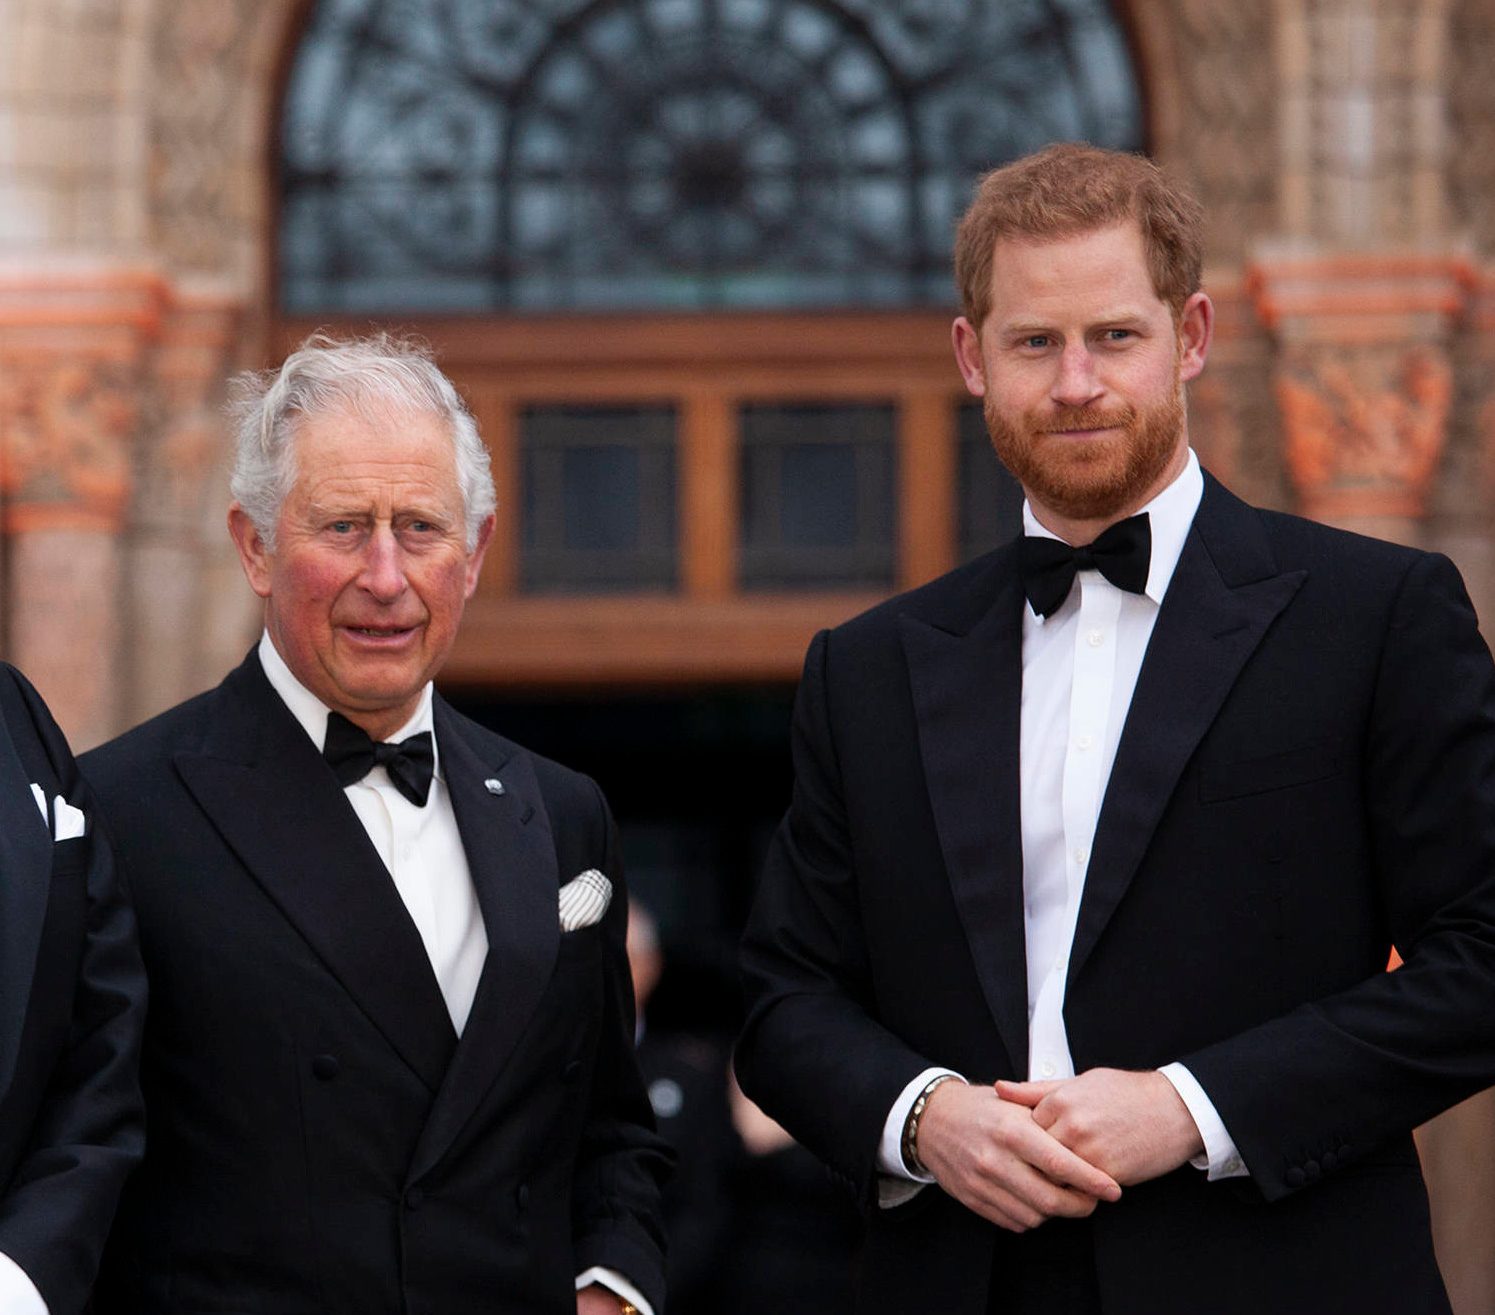 Prince Harry: News about father King Charles III swirls – 'Sadness'